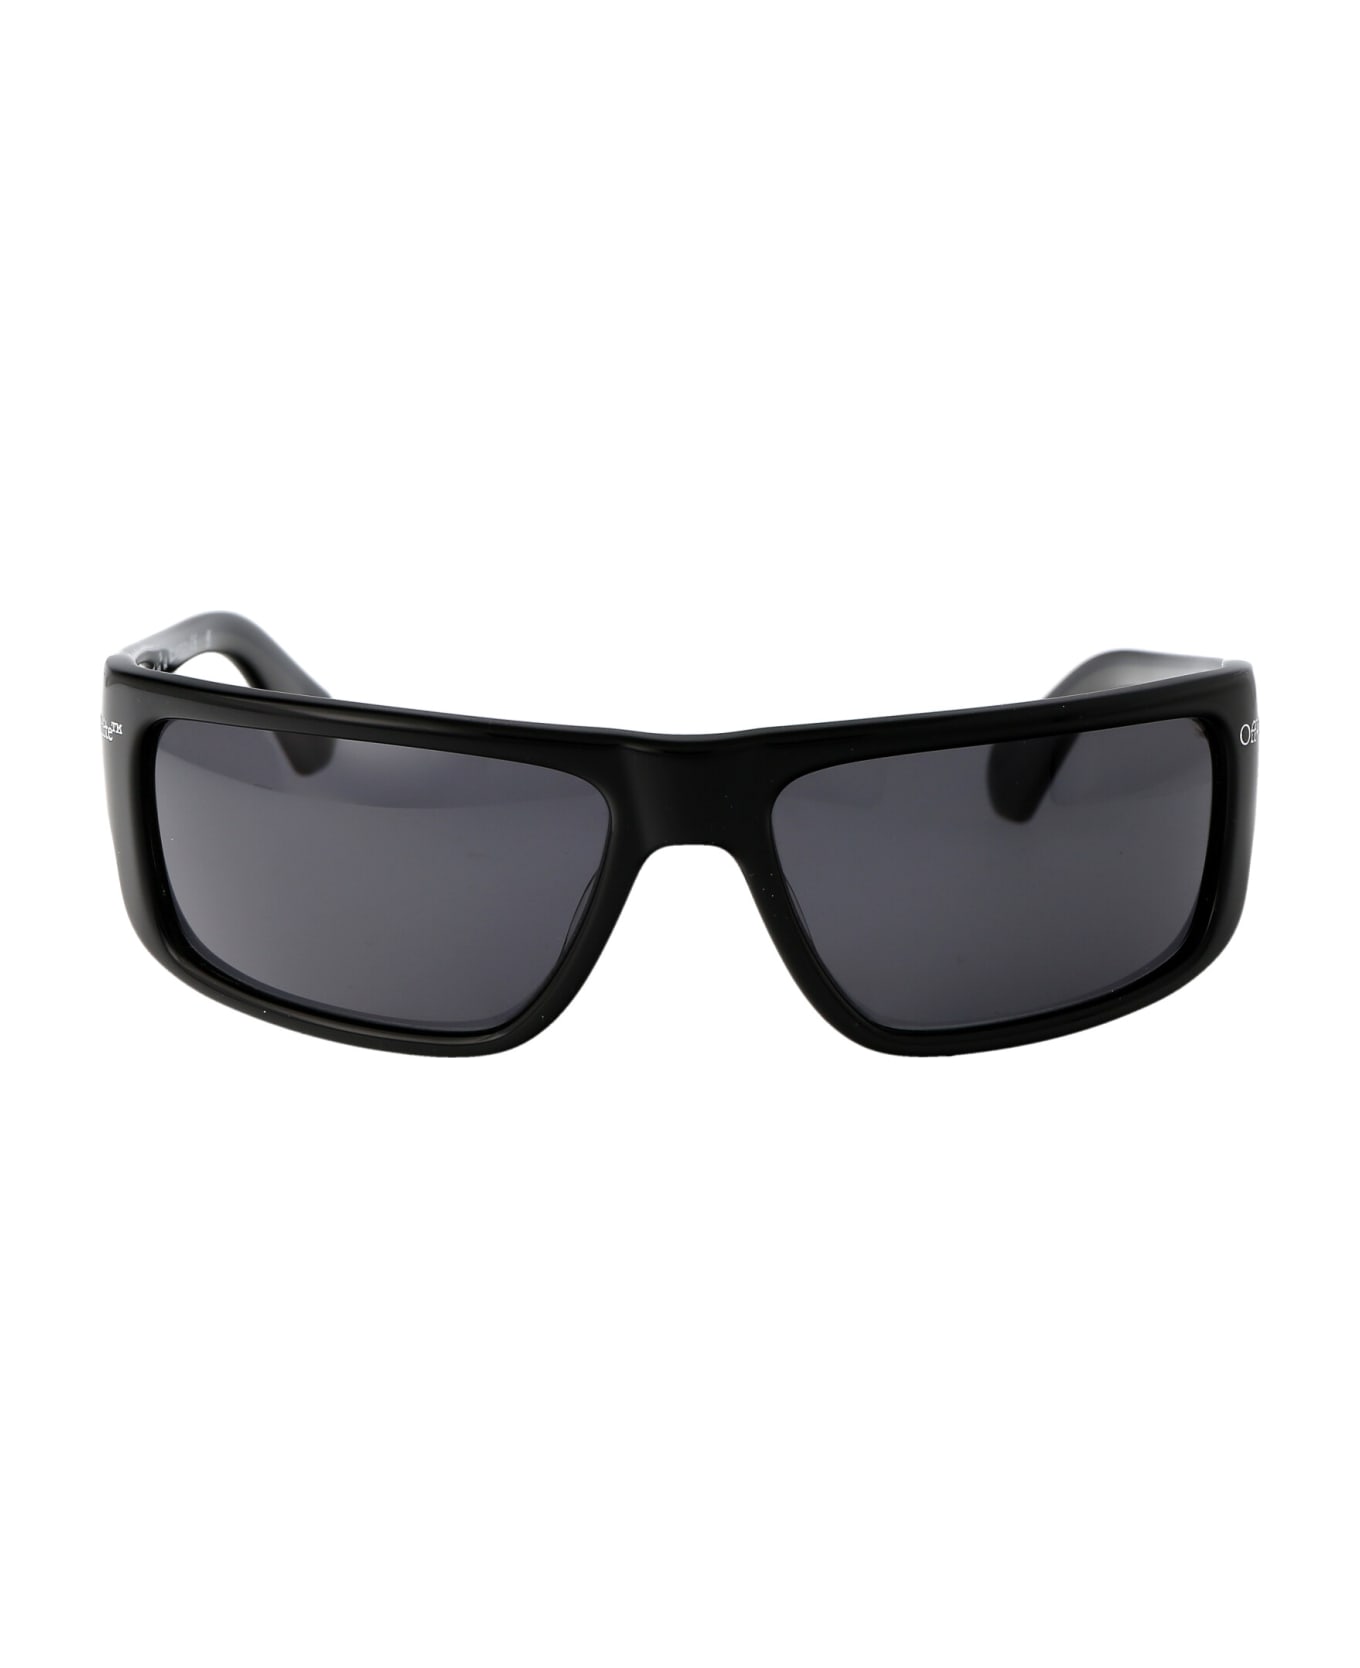 Off-White Bologna Rectangular Frame Sunglasses - 1007 BLACK